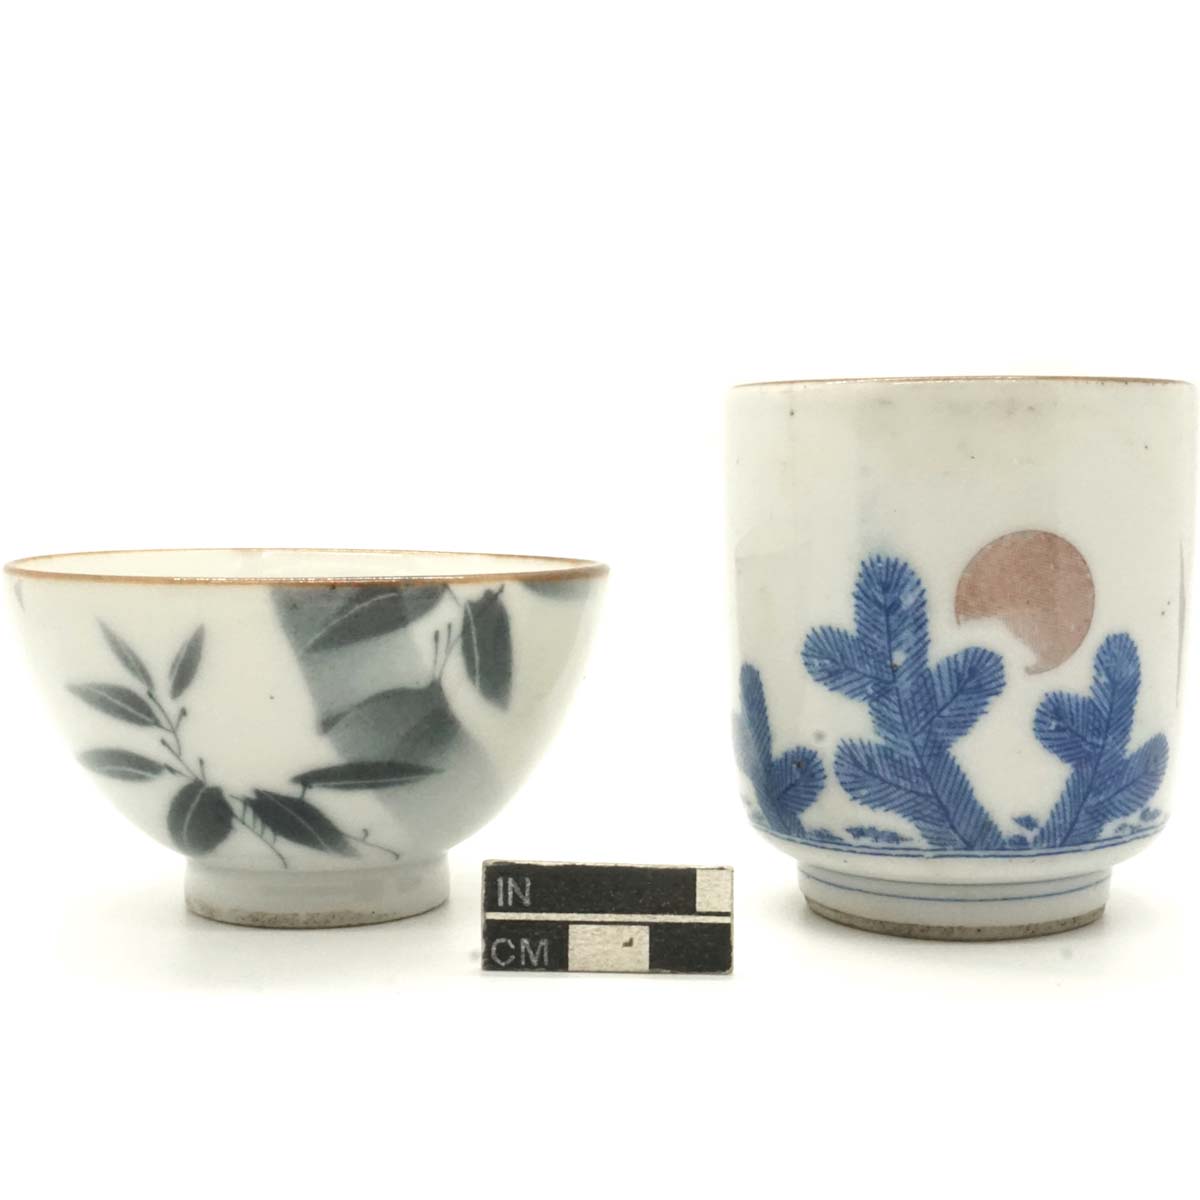 Teacups (yunomi), Fukizumi stencil and transfer print (doban) decoration, porcelain.